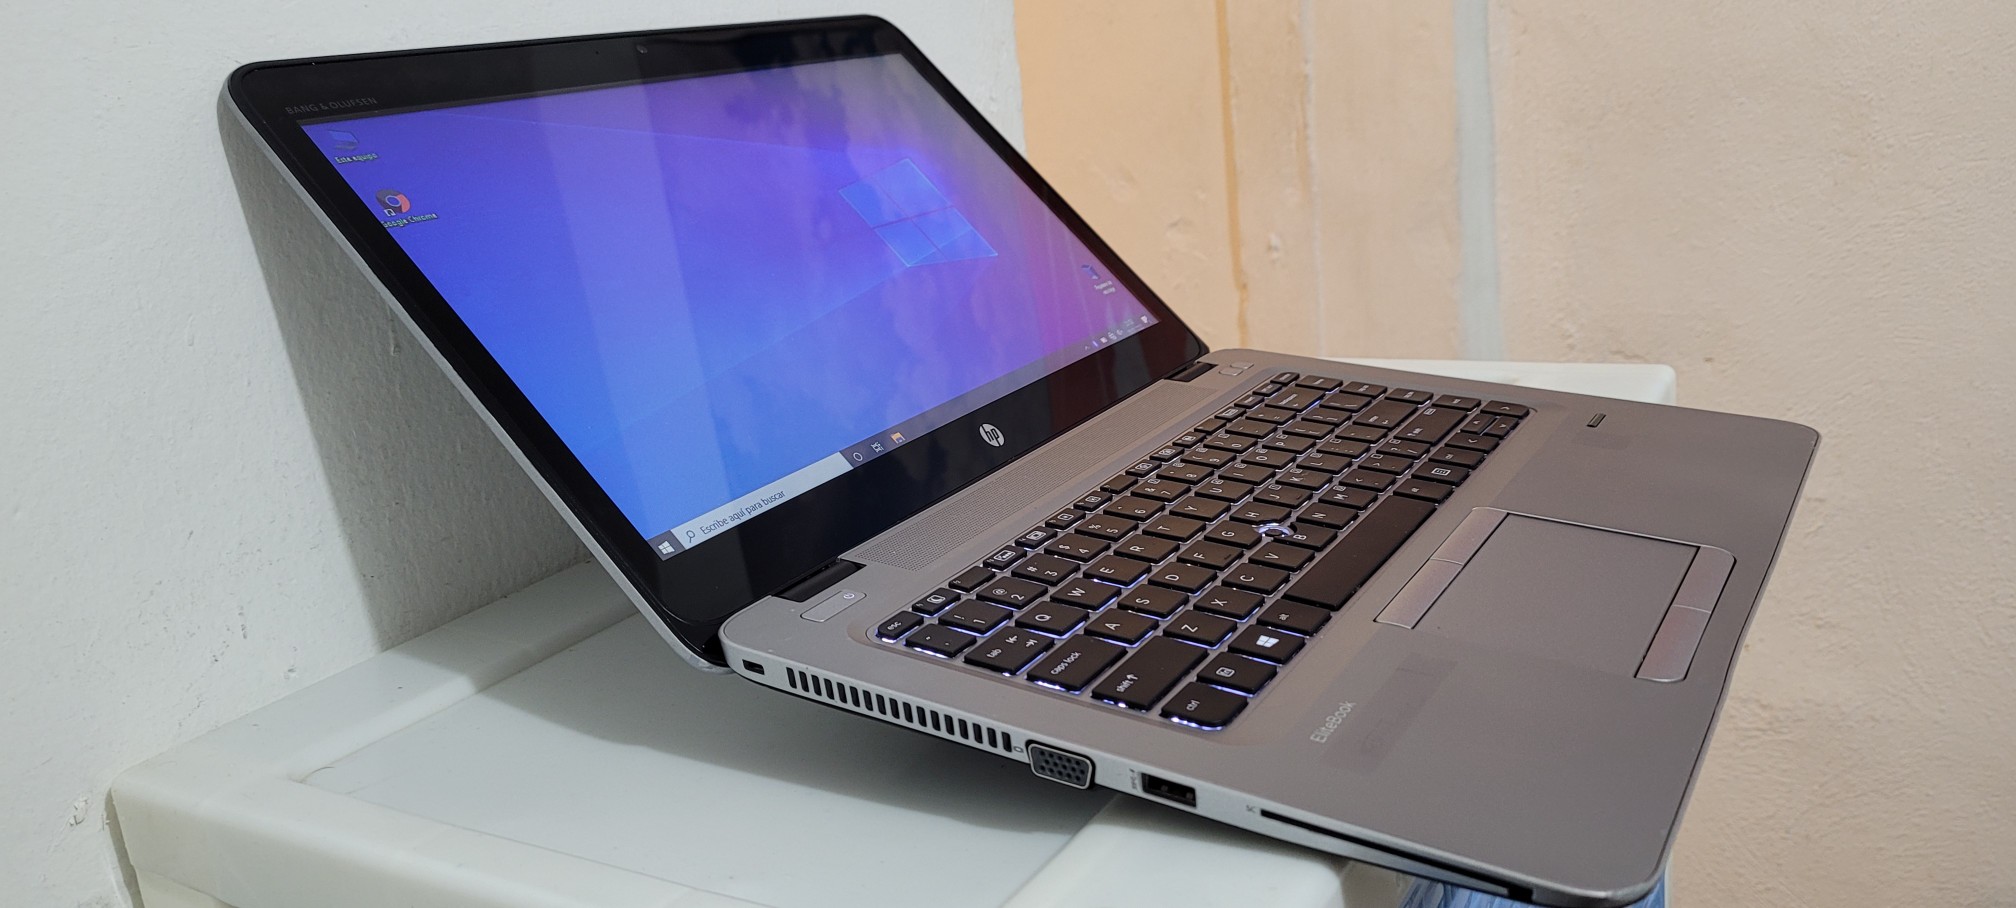 computadoras y laptops - Laptop hp Touch 14 Pulg Core i5 7ma Gen Ram 8gb ddr4 Disco 500gb Full 1